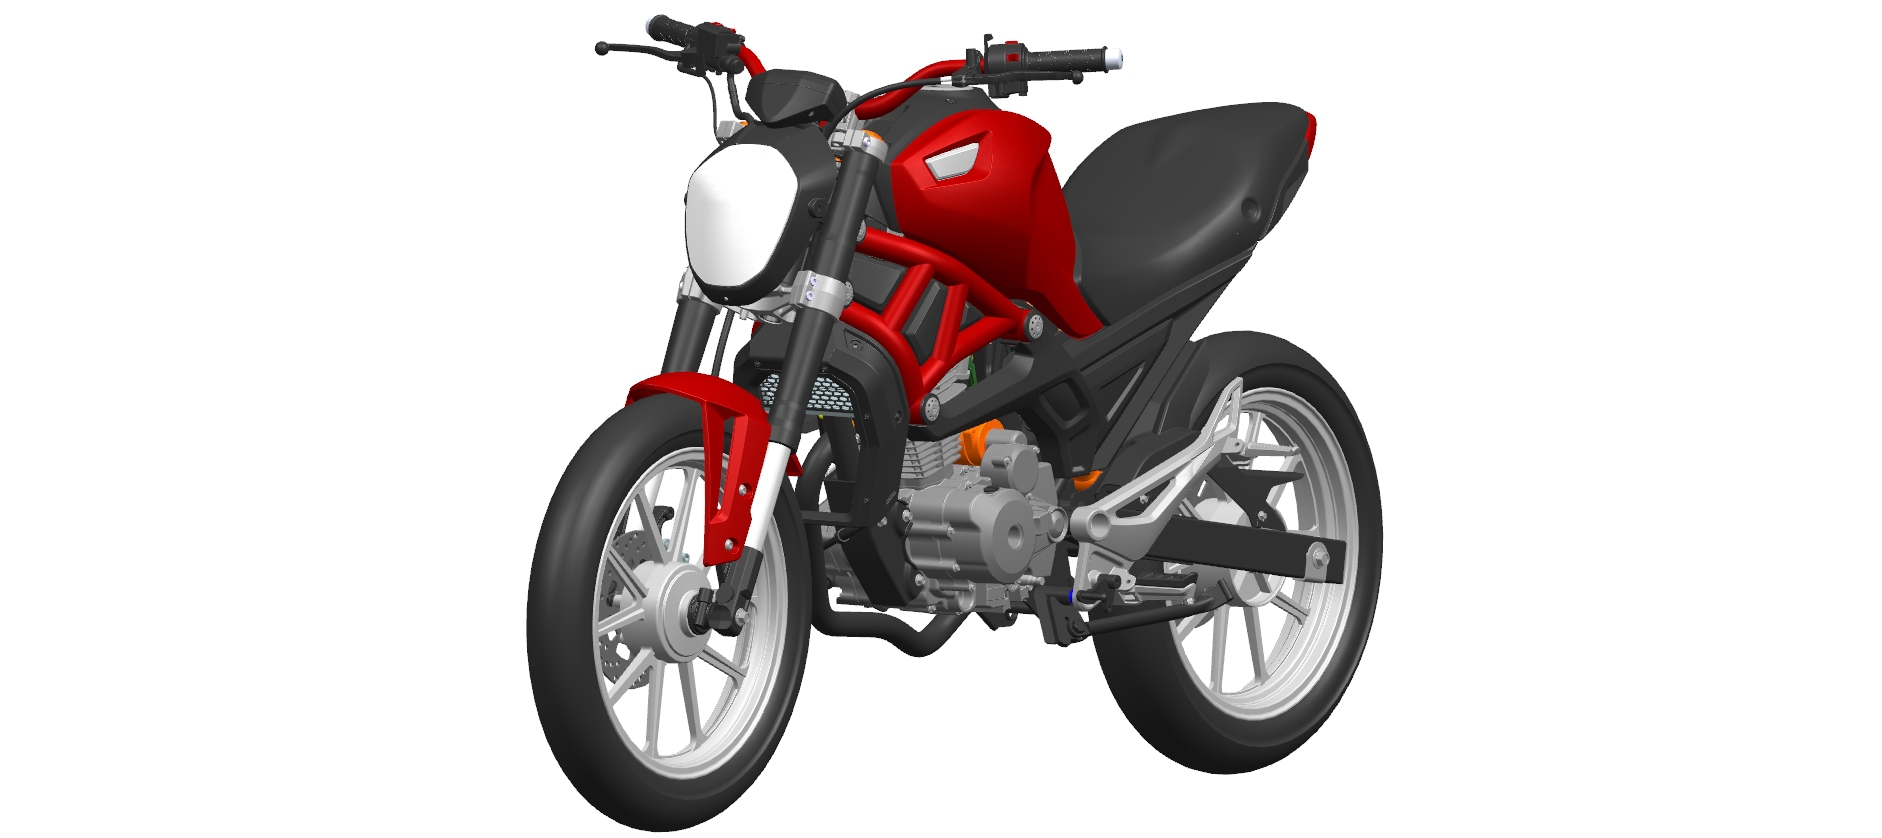 Intip Paten Desain Motor Kecil Mirip Ducati Monster Tmcblogcom